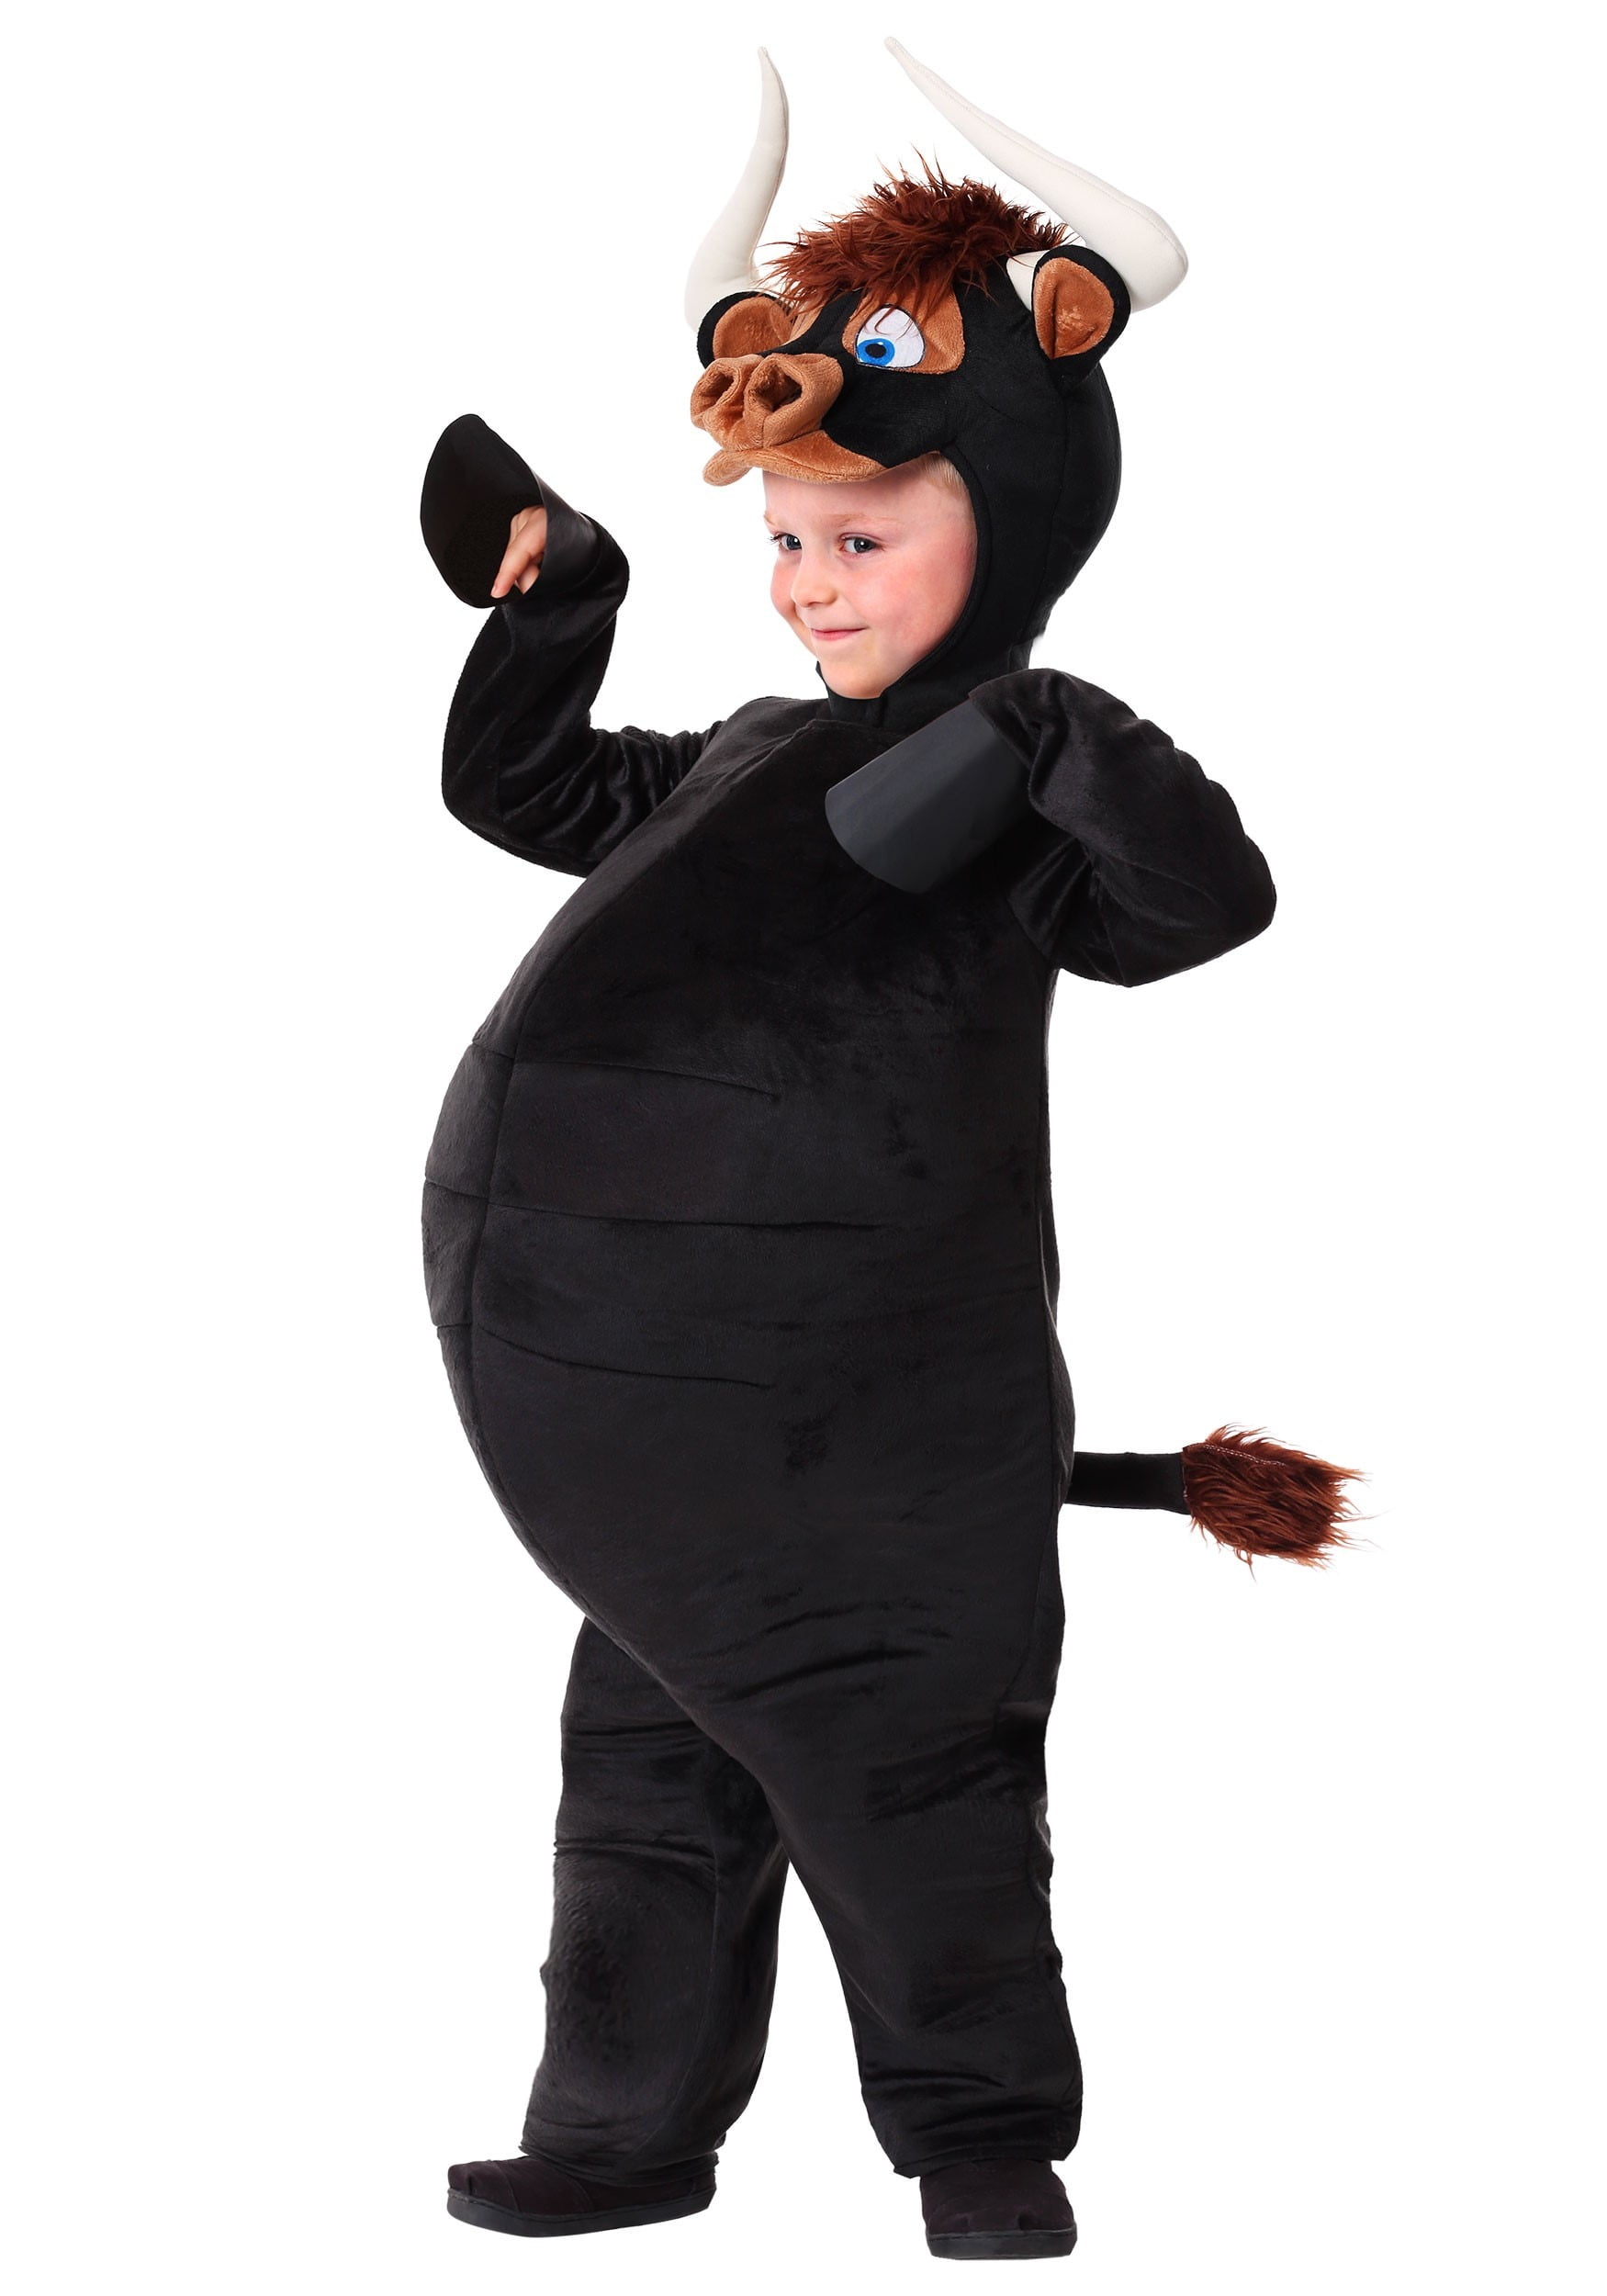 Details about   Cruz Classic Toddler Disney Cars 3 Movie Fancy Dress Halloween Child Costume 4-6 